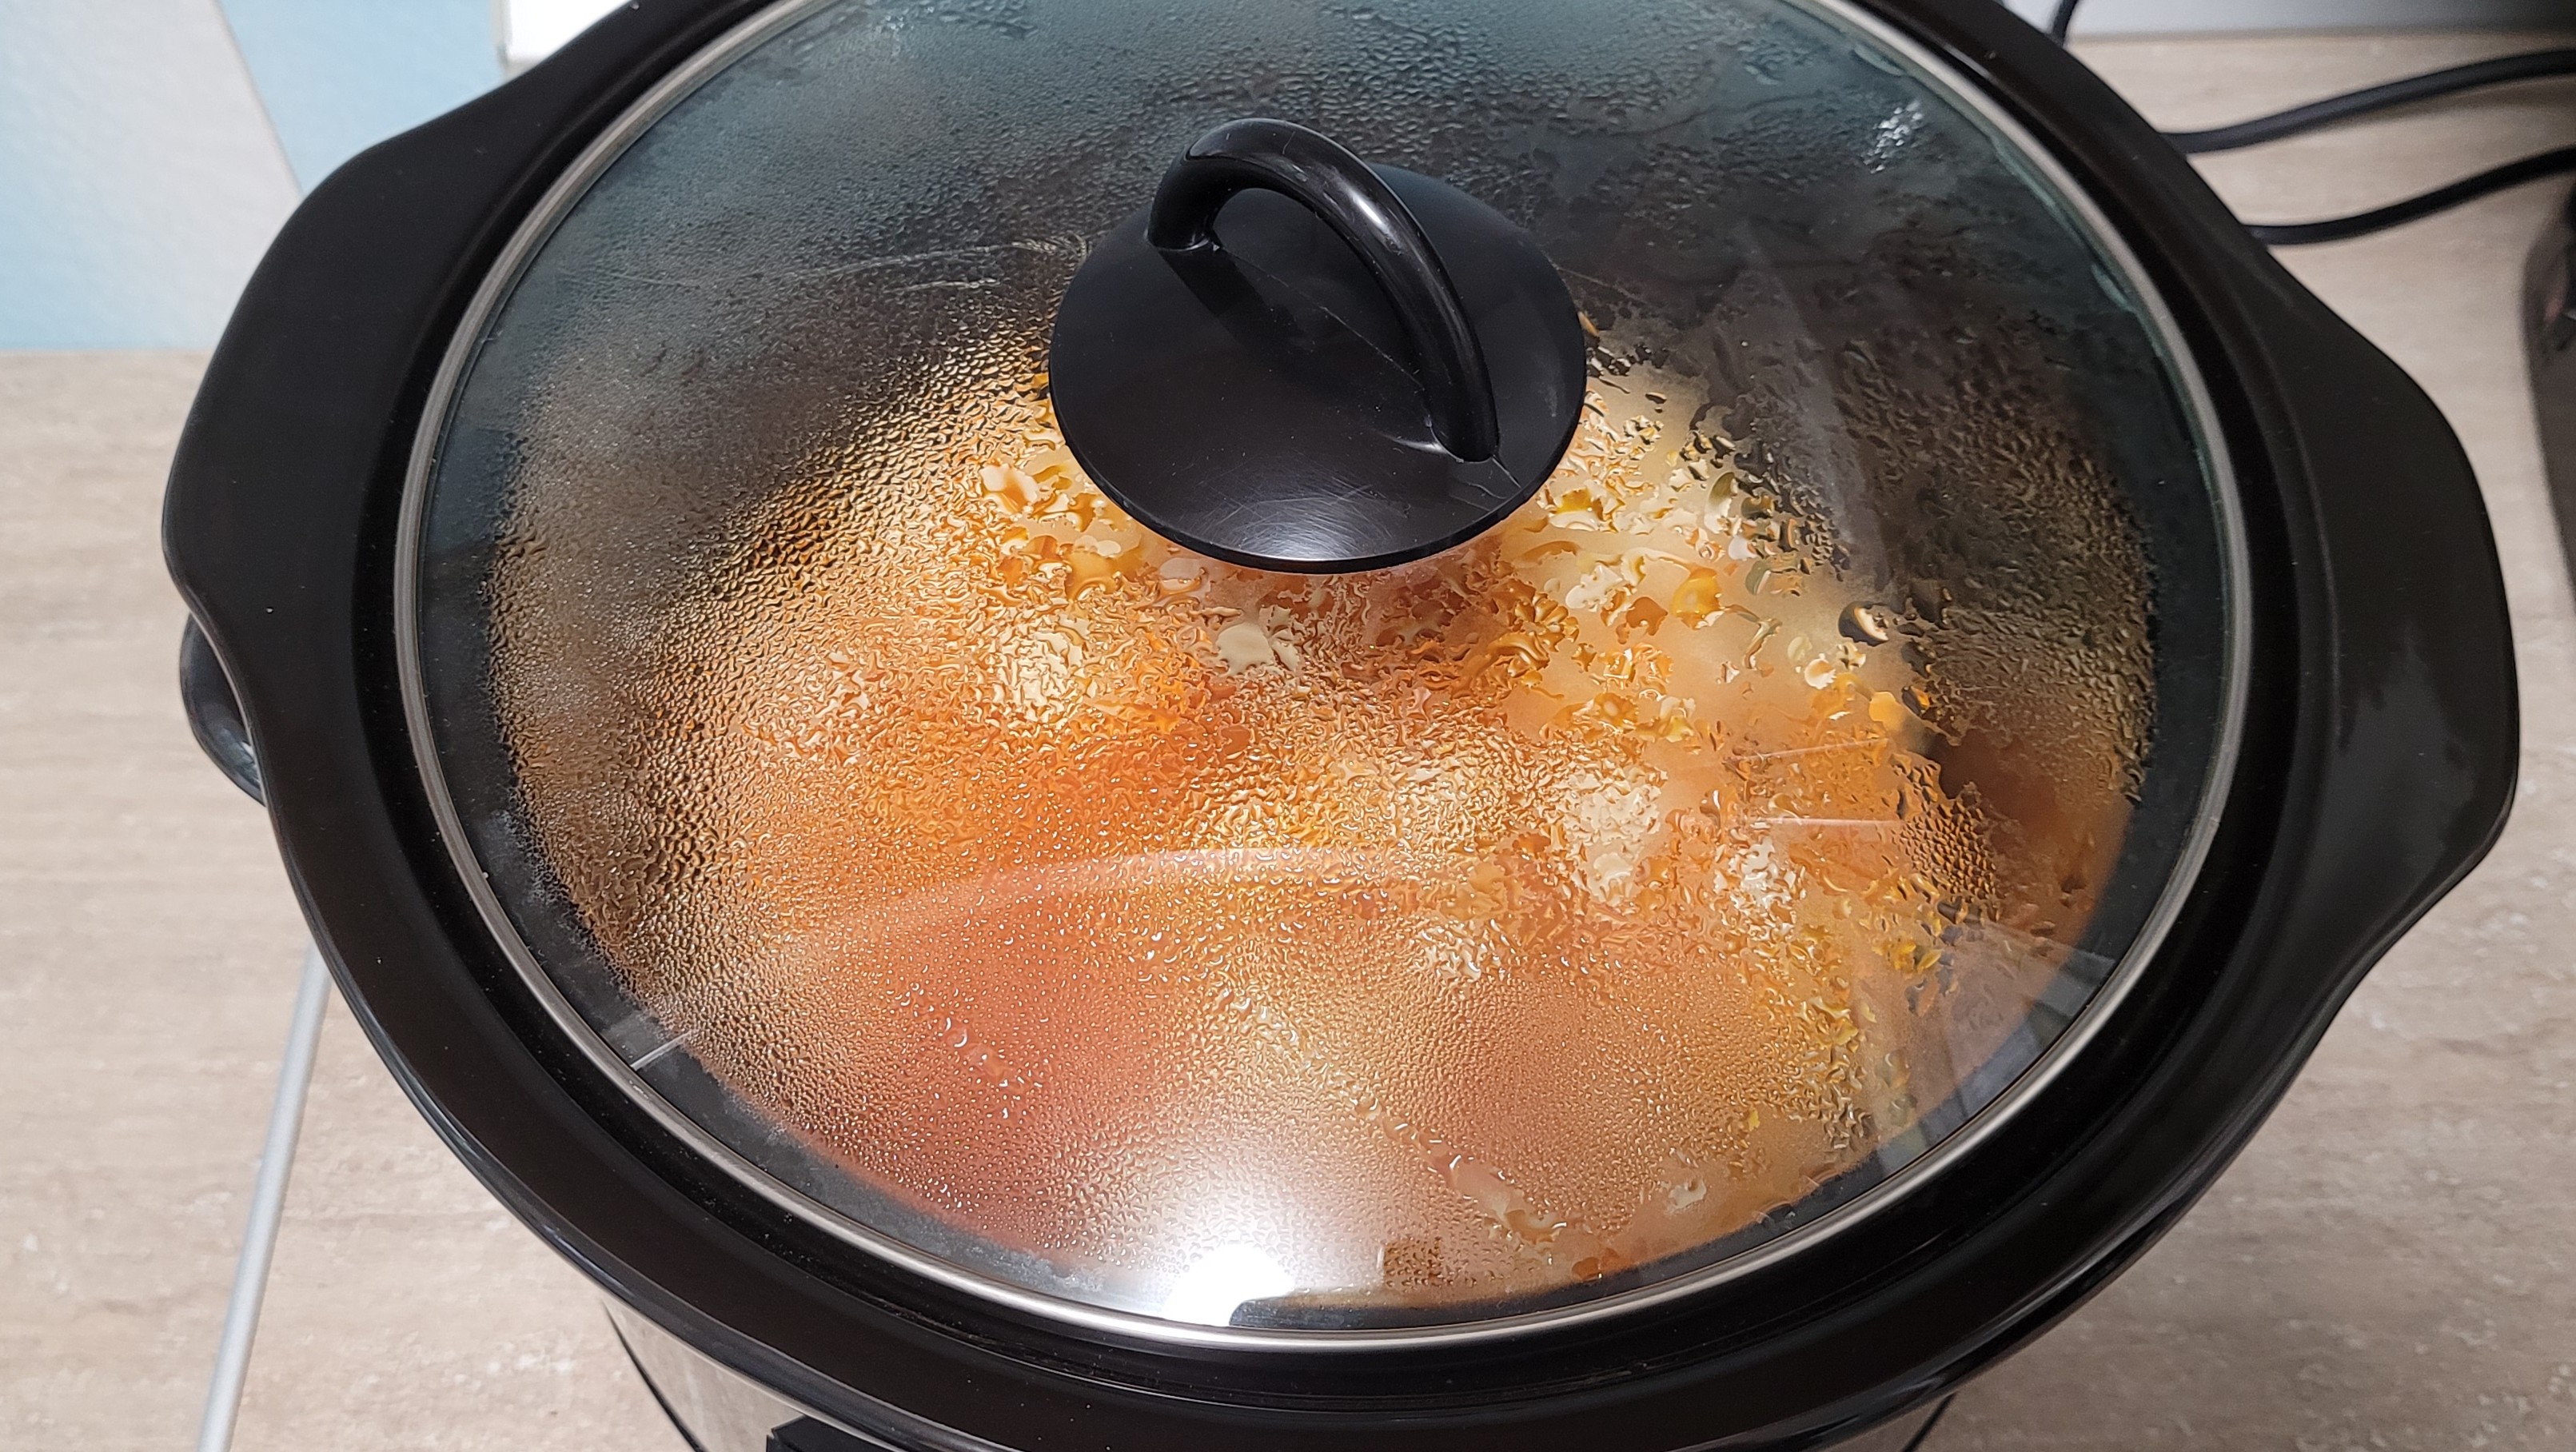 Iahnie de fasole la slow cooker Crock Pot